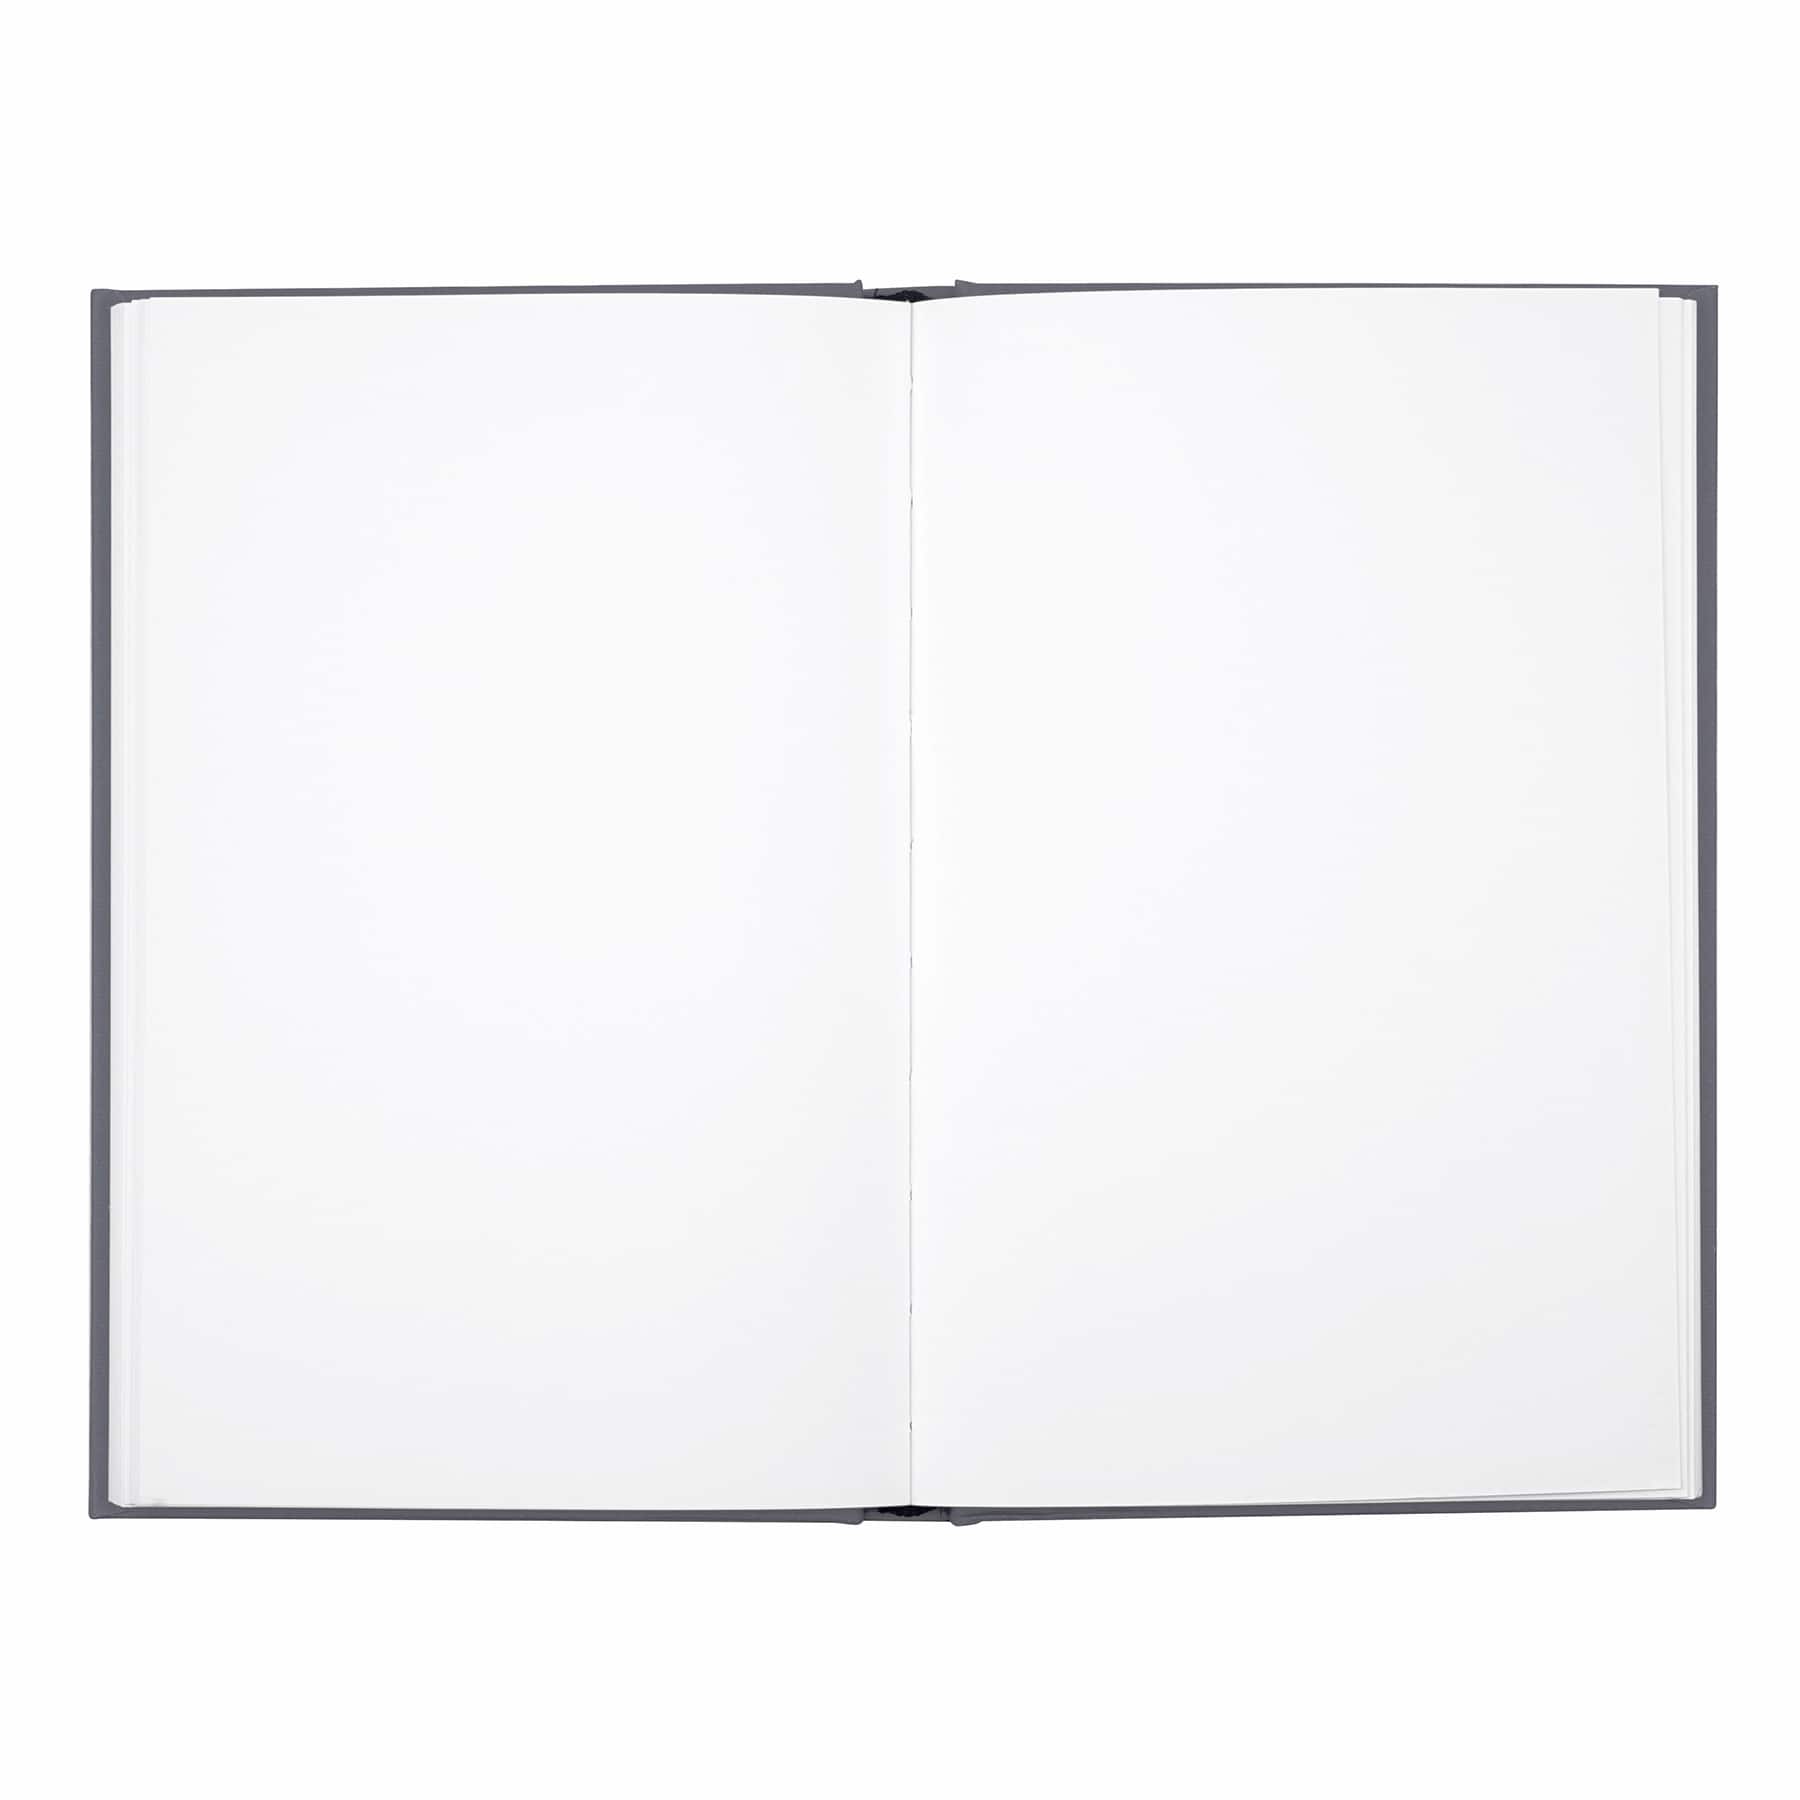 Sketchbook by Artist's Loft™